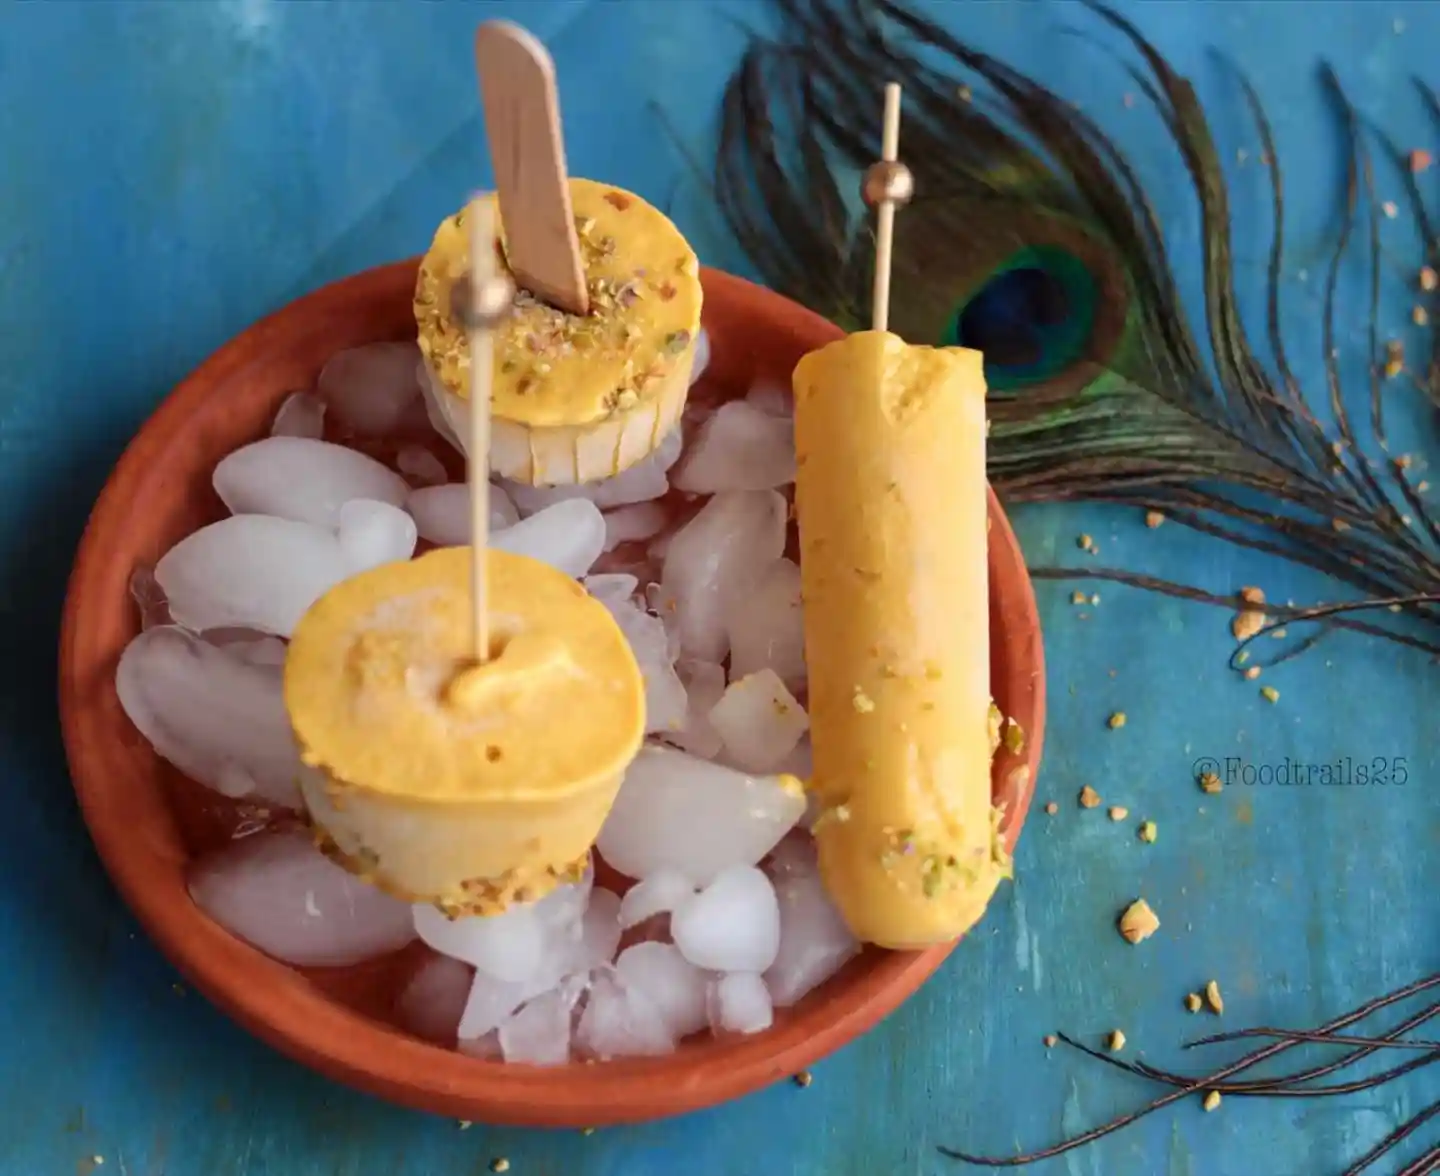 Mango kulfi ice cream pops on ice in a bowl.